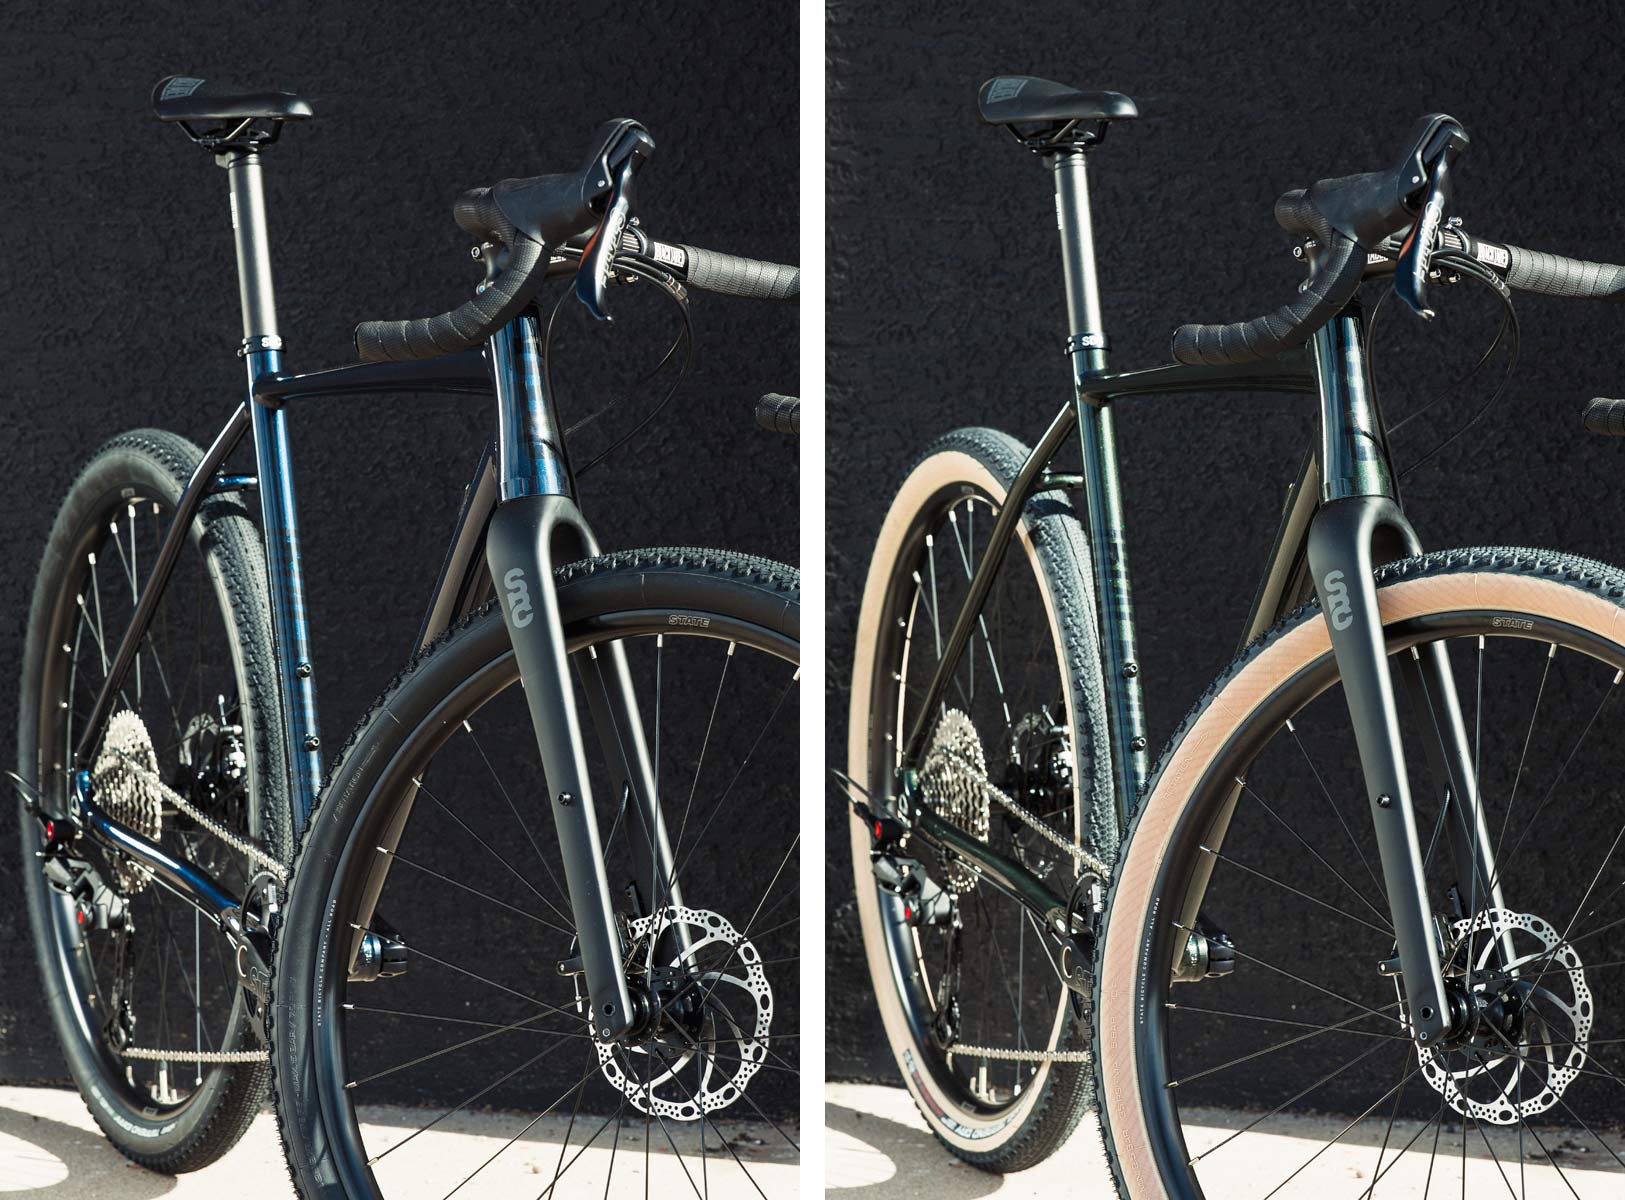 2021 State 6061 Black Label All-Road affordable alloy gravel bike updates, angled details